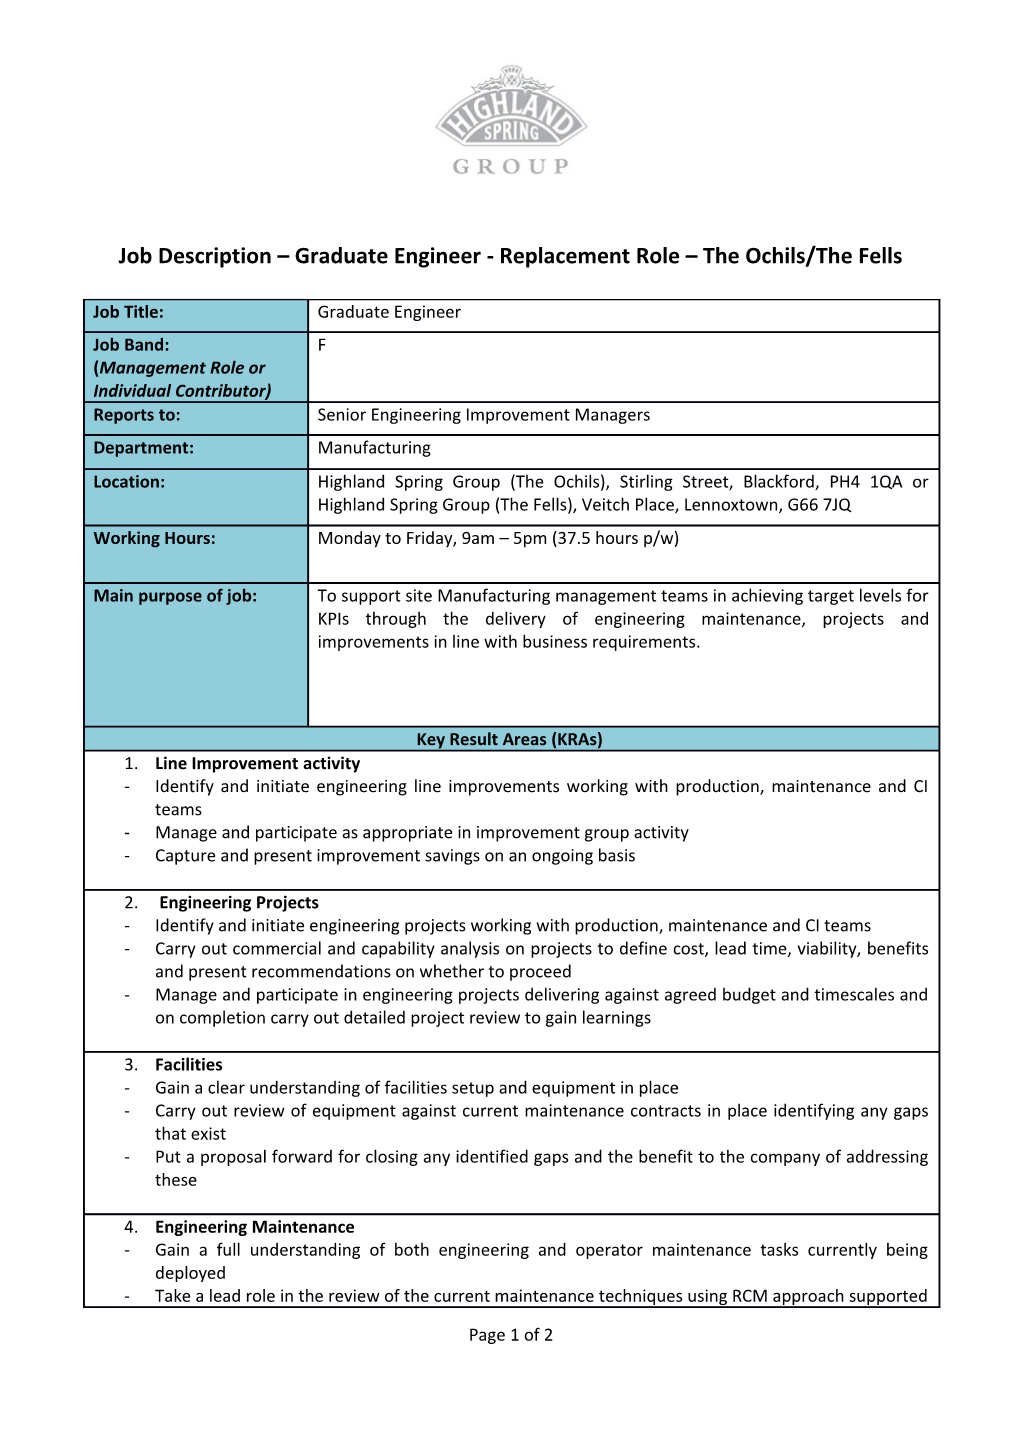 Job Description Graduate Engineer - Replacement Role the Ochils/The Fells